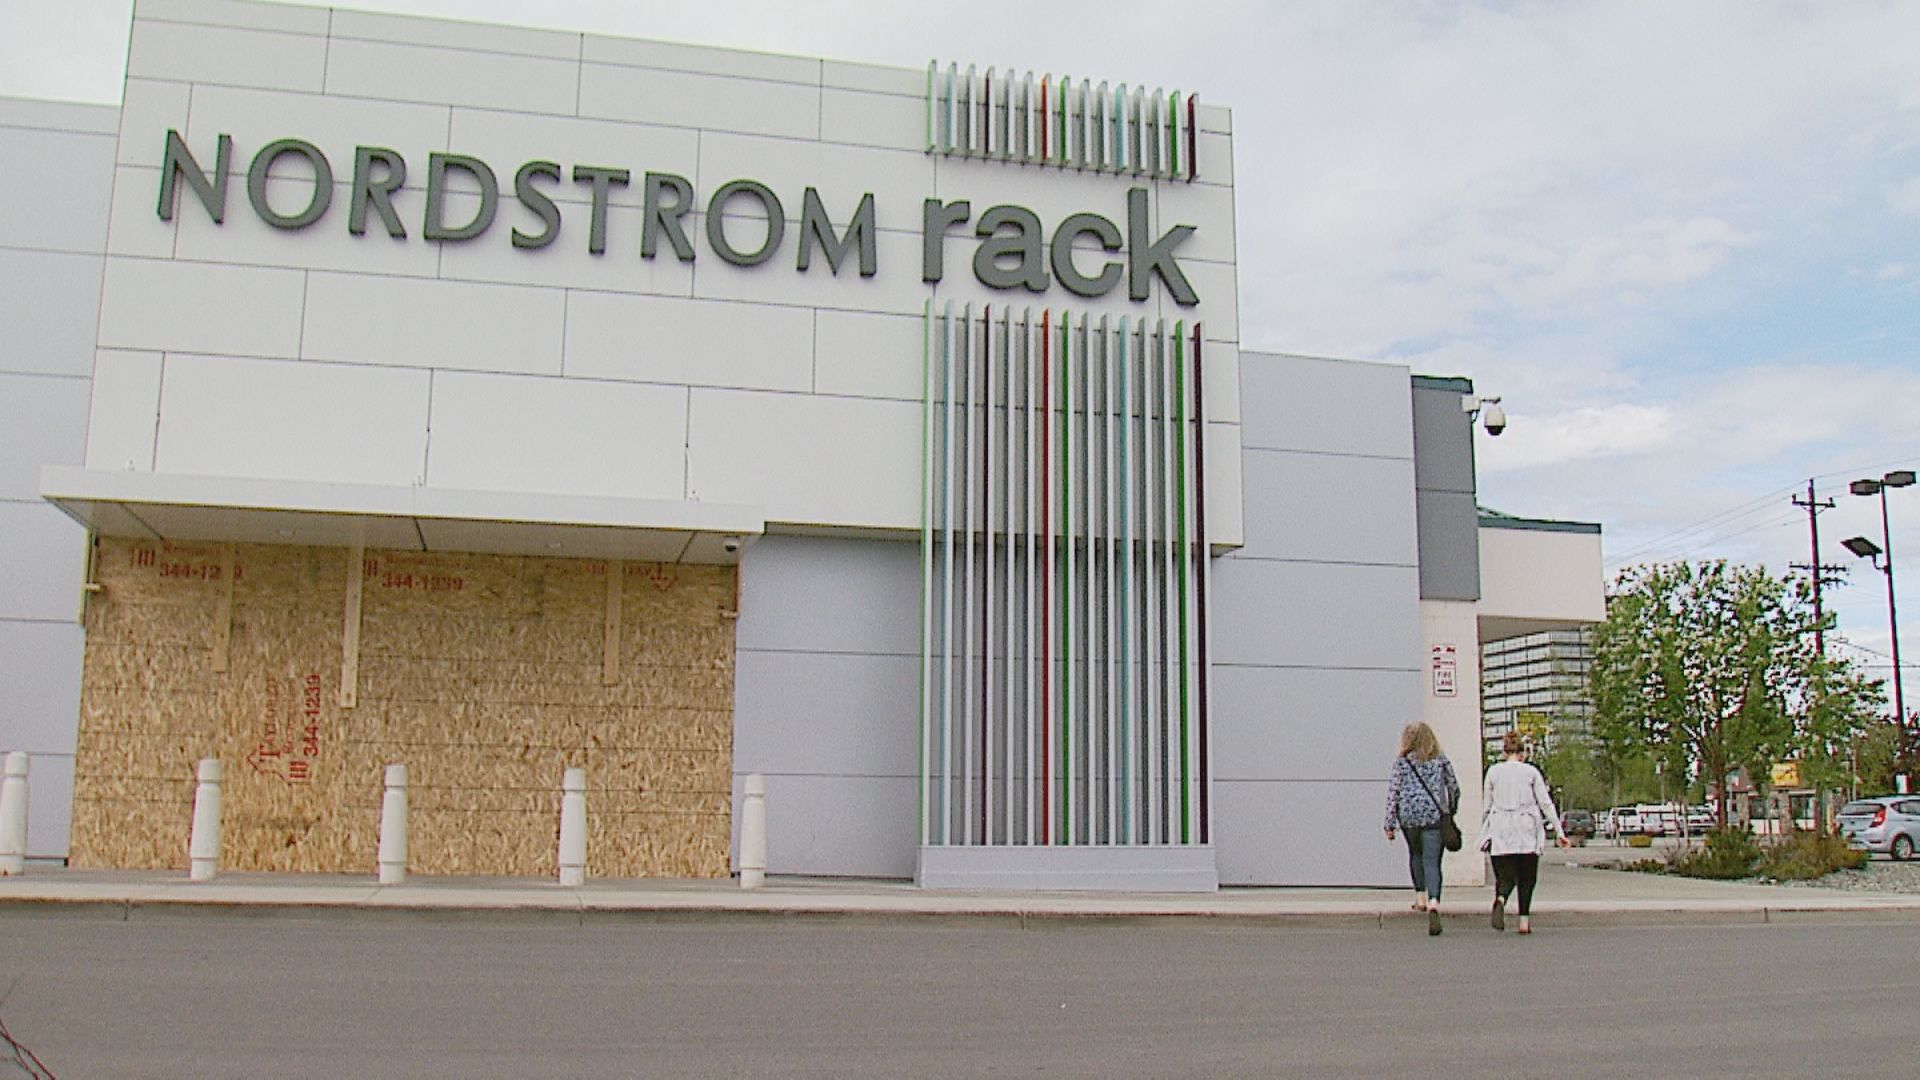 Nordstorm Rack to close downtown Minneapolis store - Minneapolis